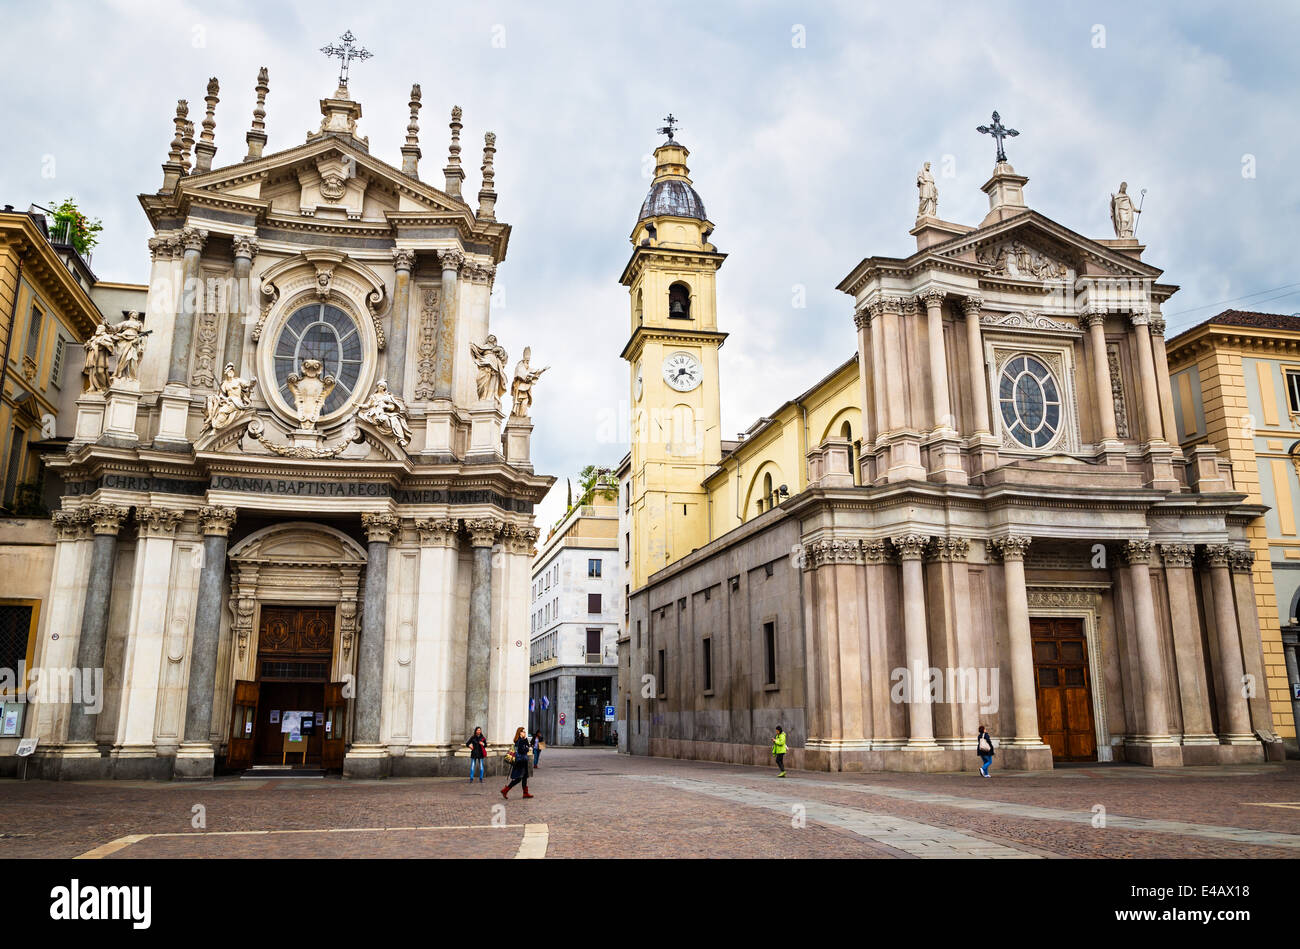 Kirchen von San Carlo und Santa Cristina, Piazza San Carlo, Turin, Italien. Stockfoto